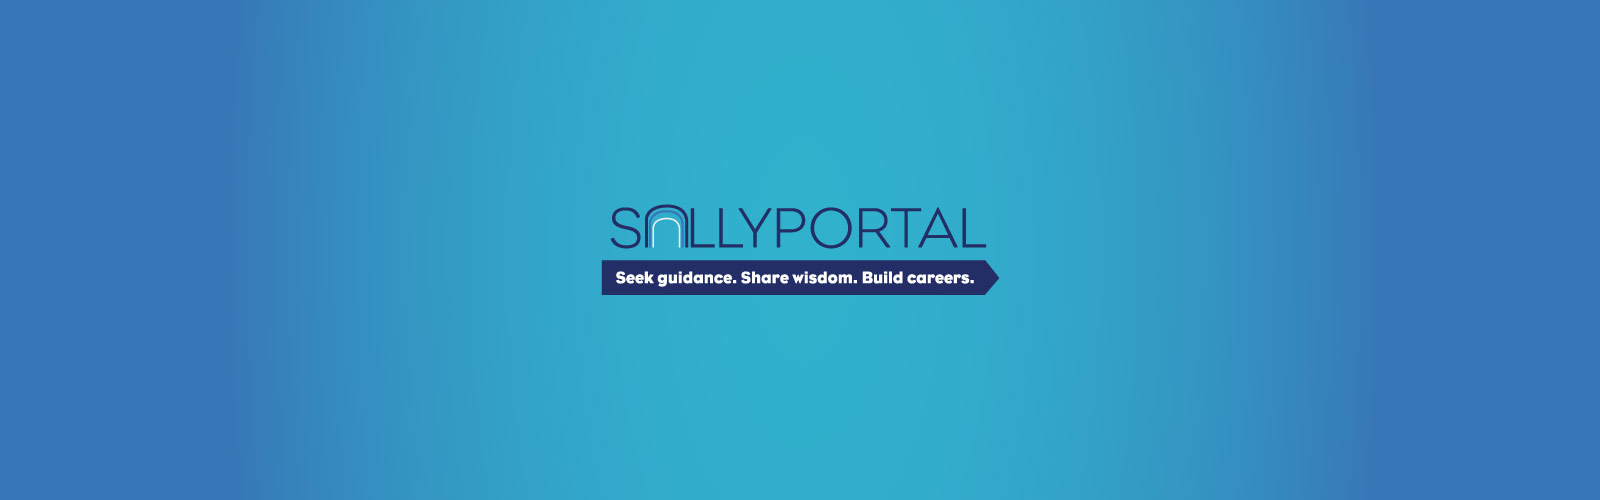 Sallyportal